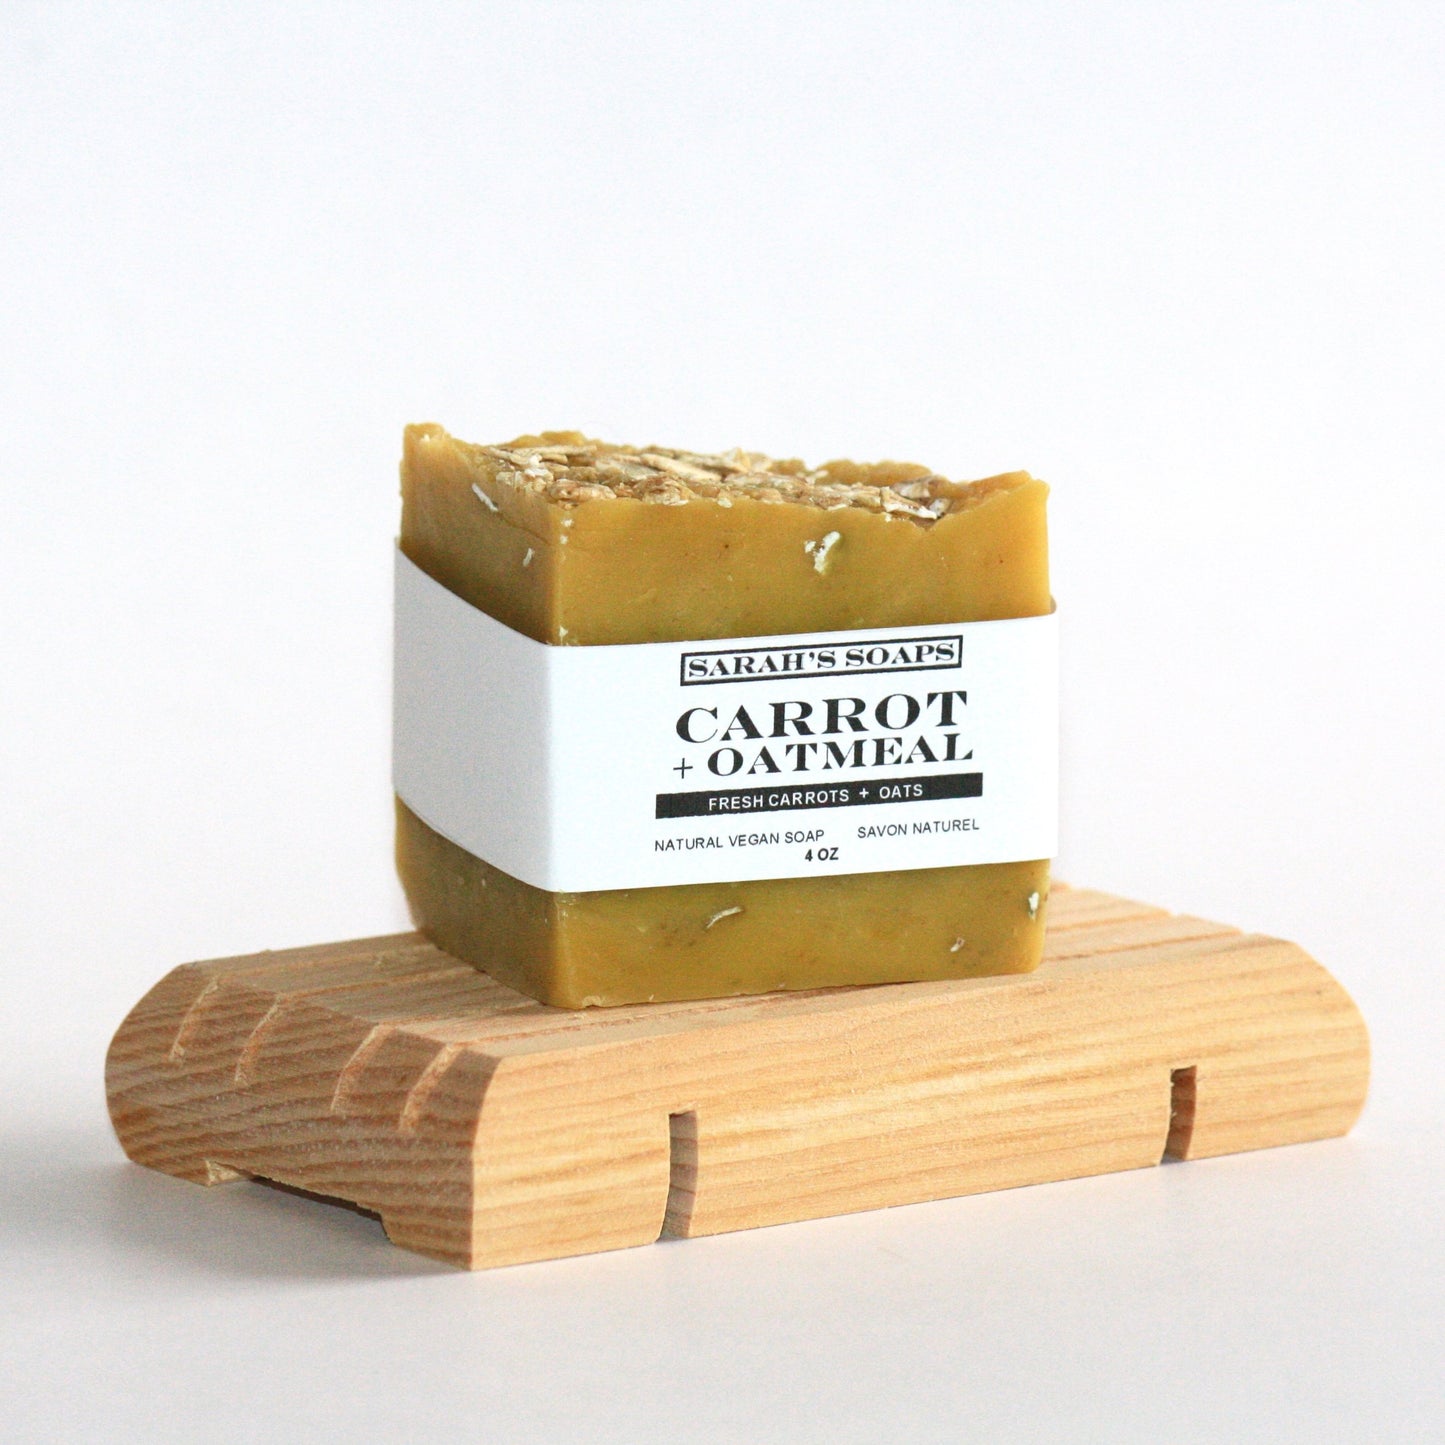 CARROT + OATMEAL bar soap